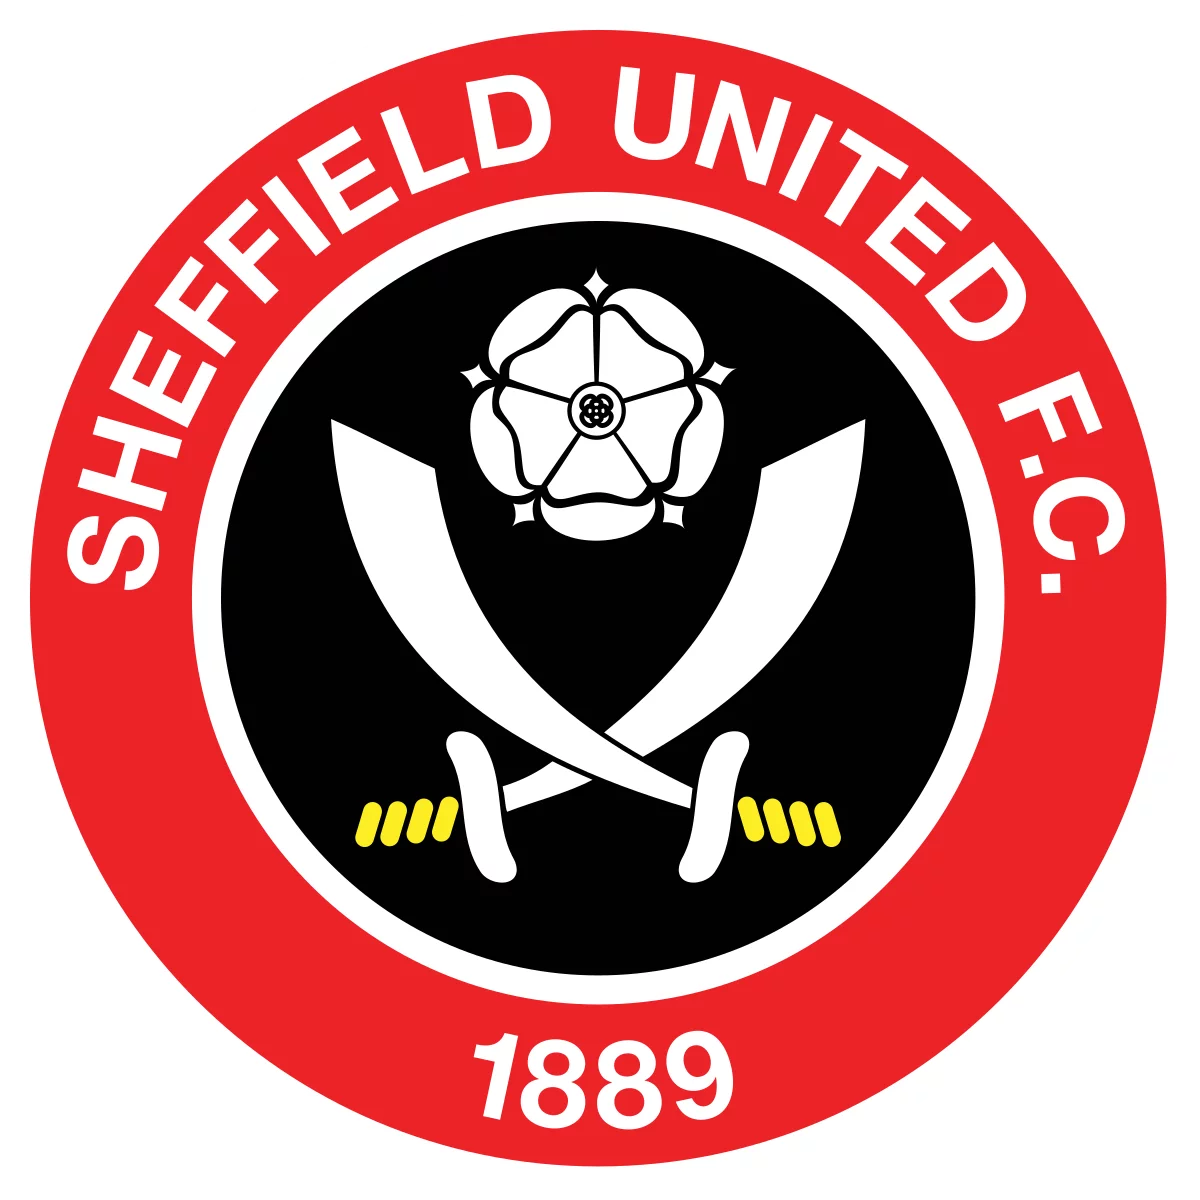 Sheffield United FC logo